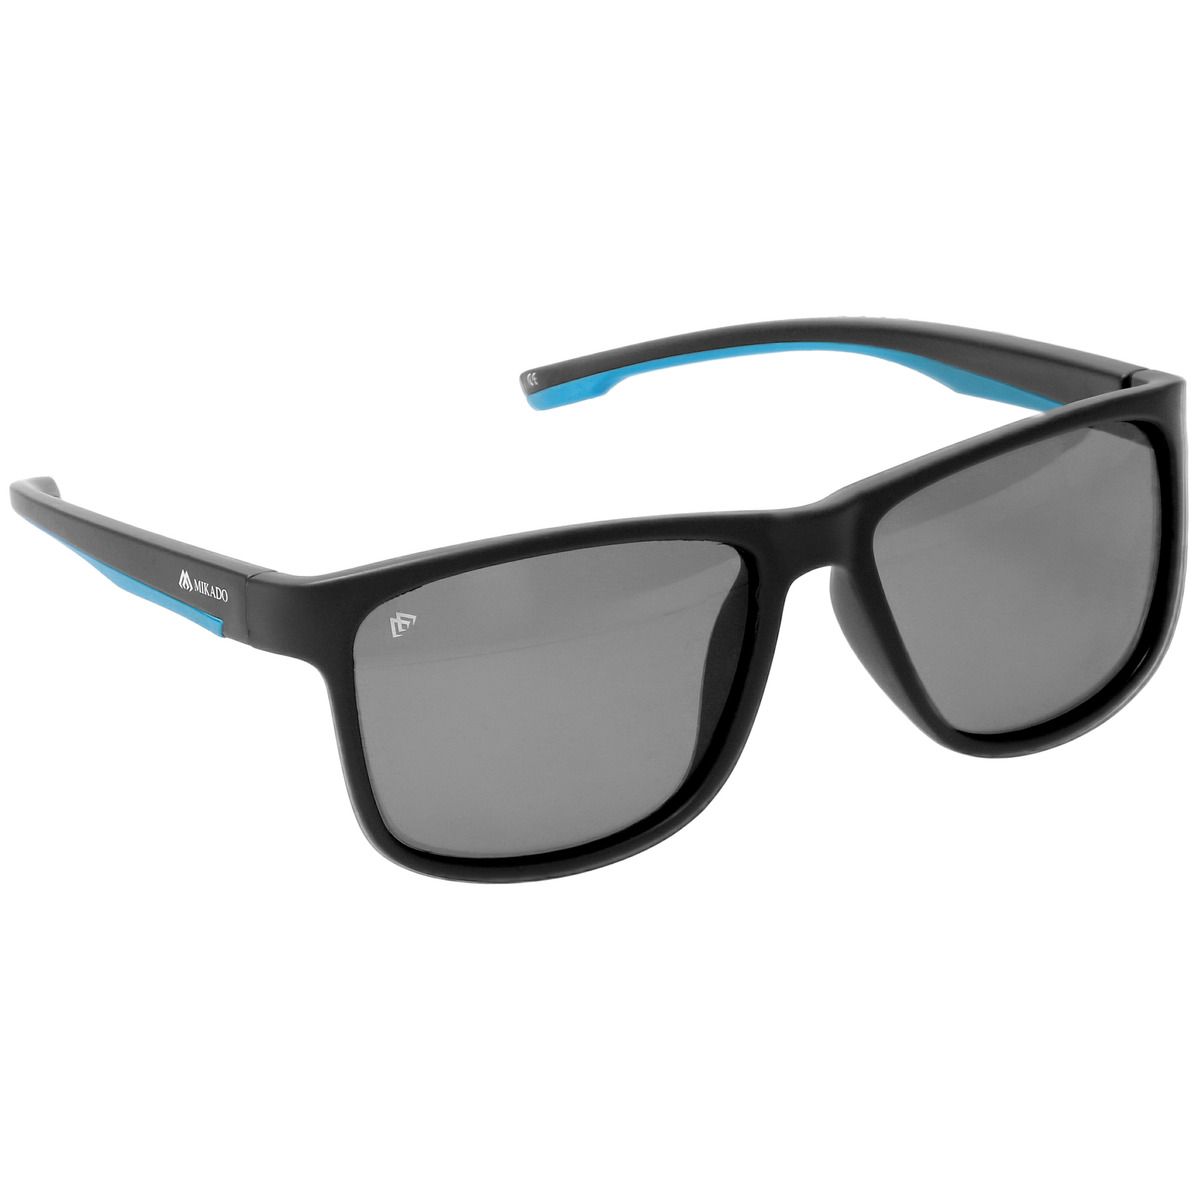 Mikado Sunglasses Polarized - 484 BLUE AND GREY